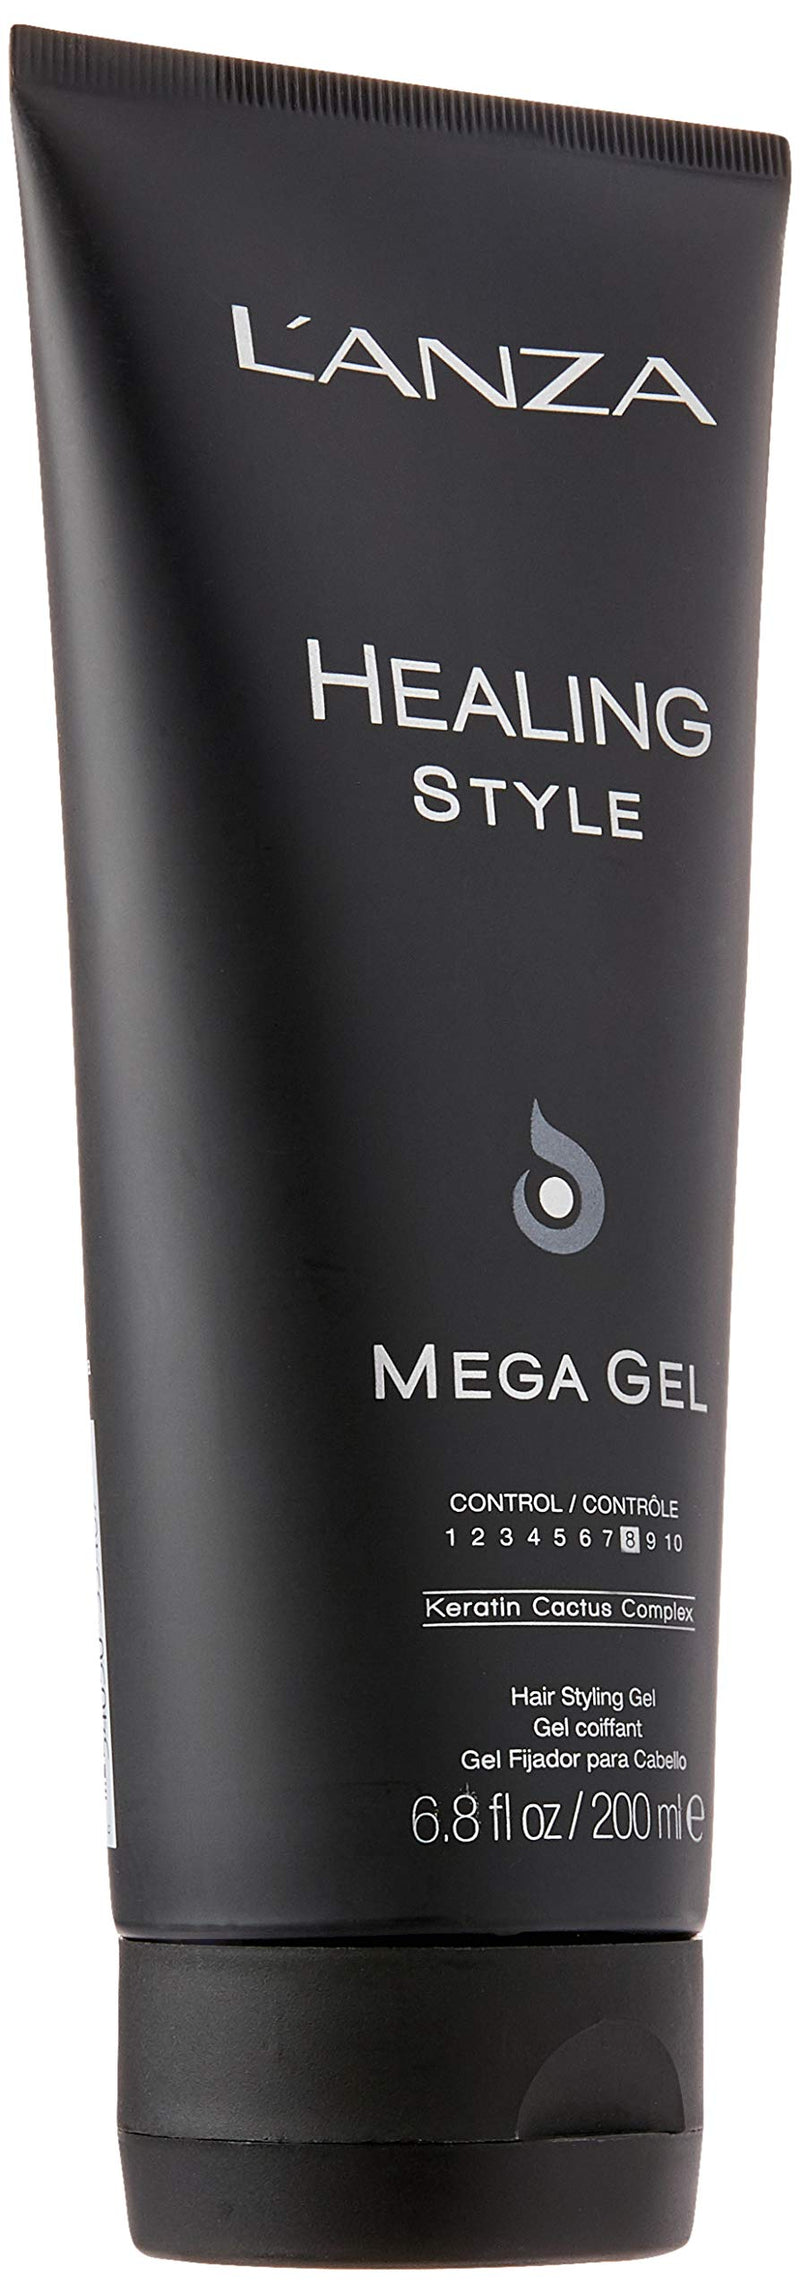 [Australia] - L'ANZA Healing Style Mega Gel 200 ml 